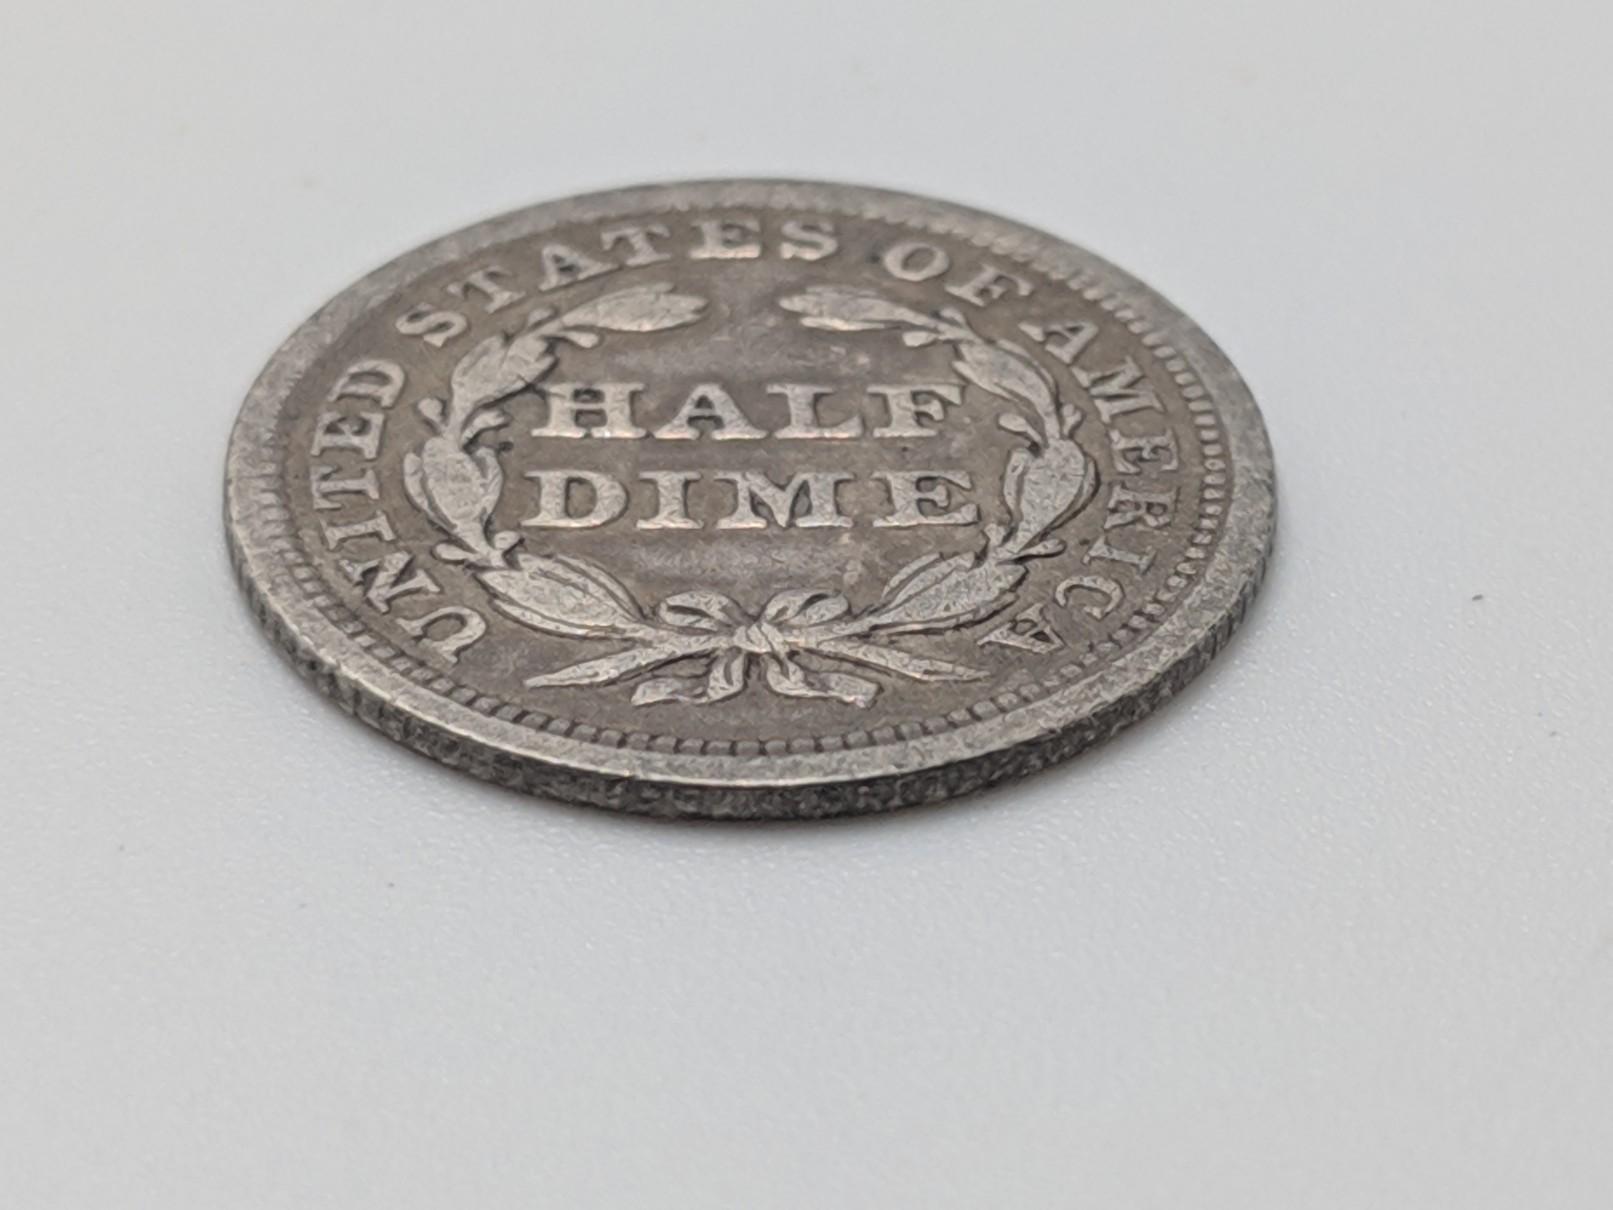 1853 Liberty Seated 5¢